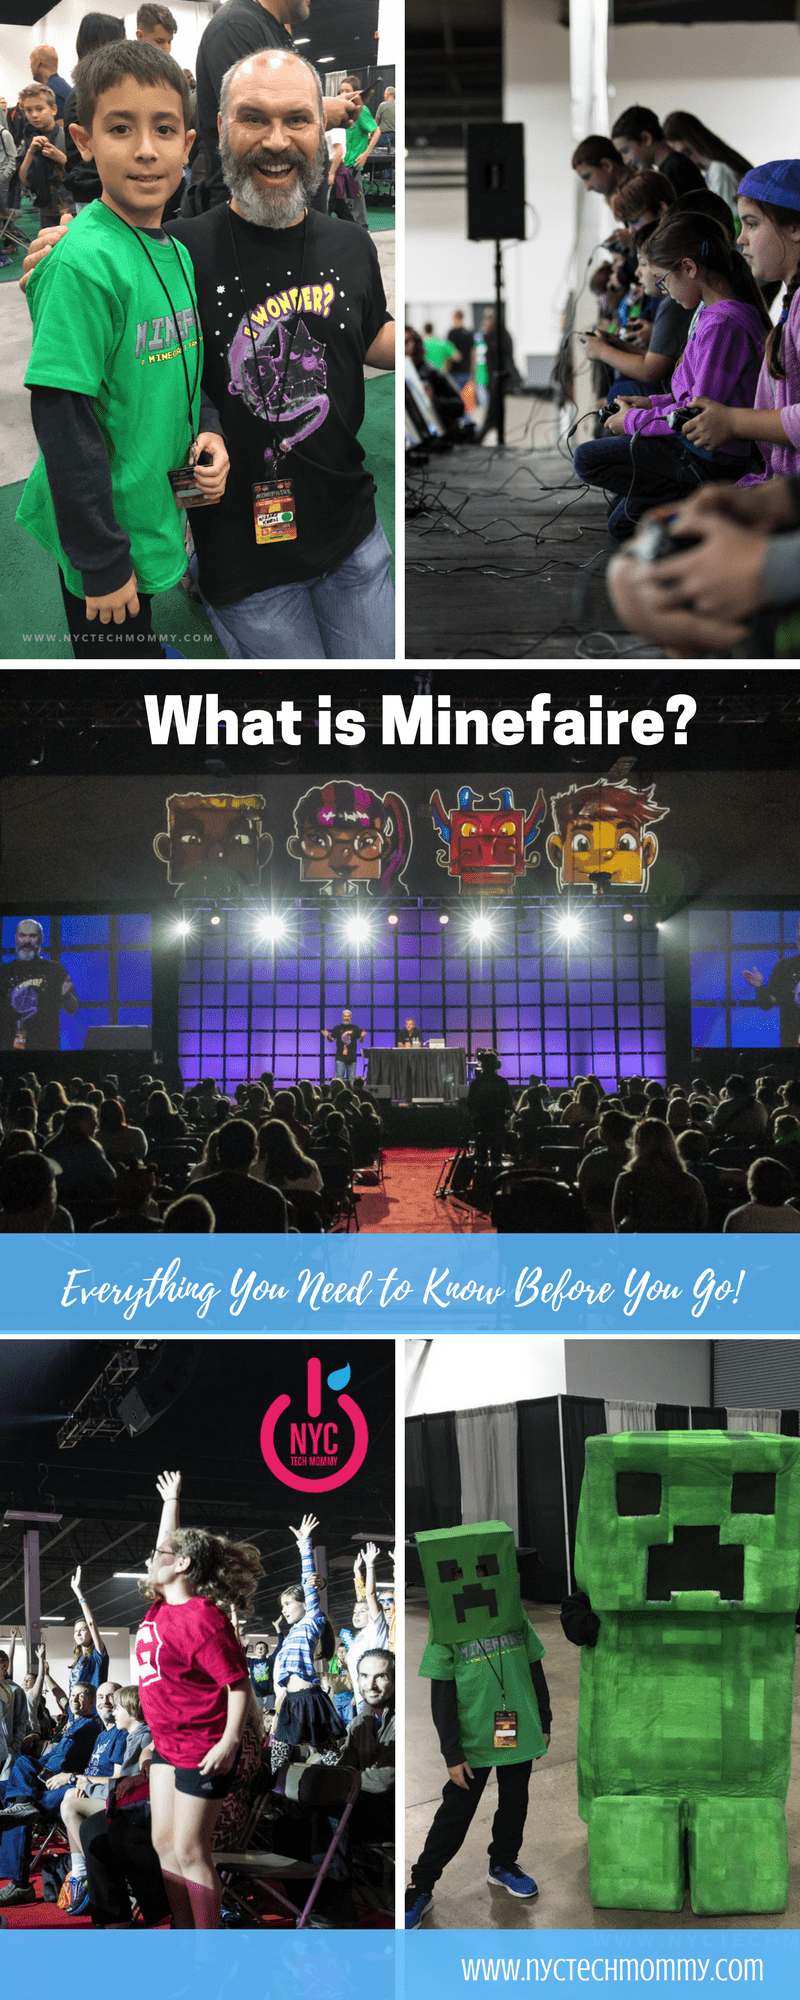 Minefaire - The Ultimate Minecraft Fan Experience - (COMP), Los